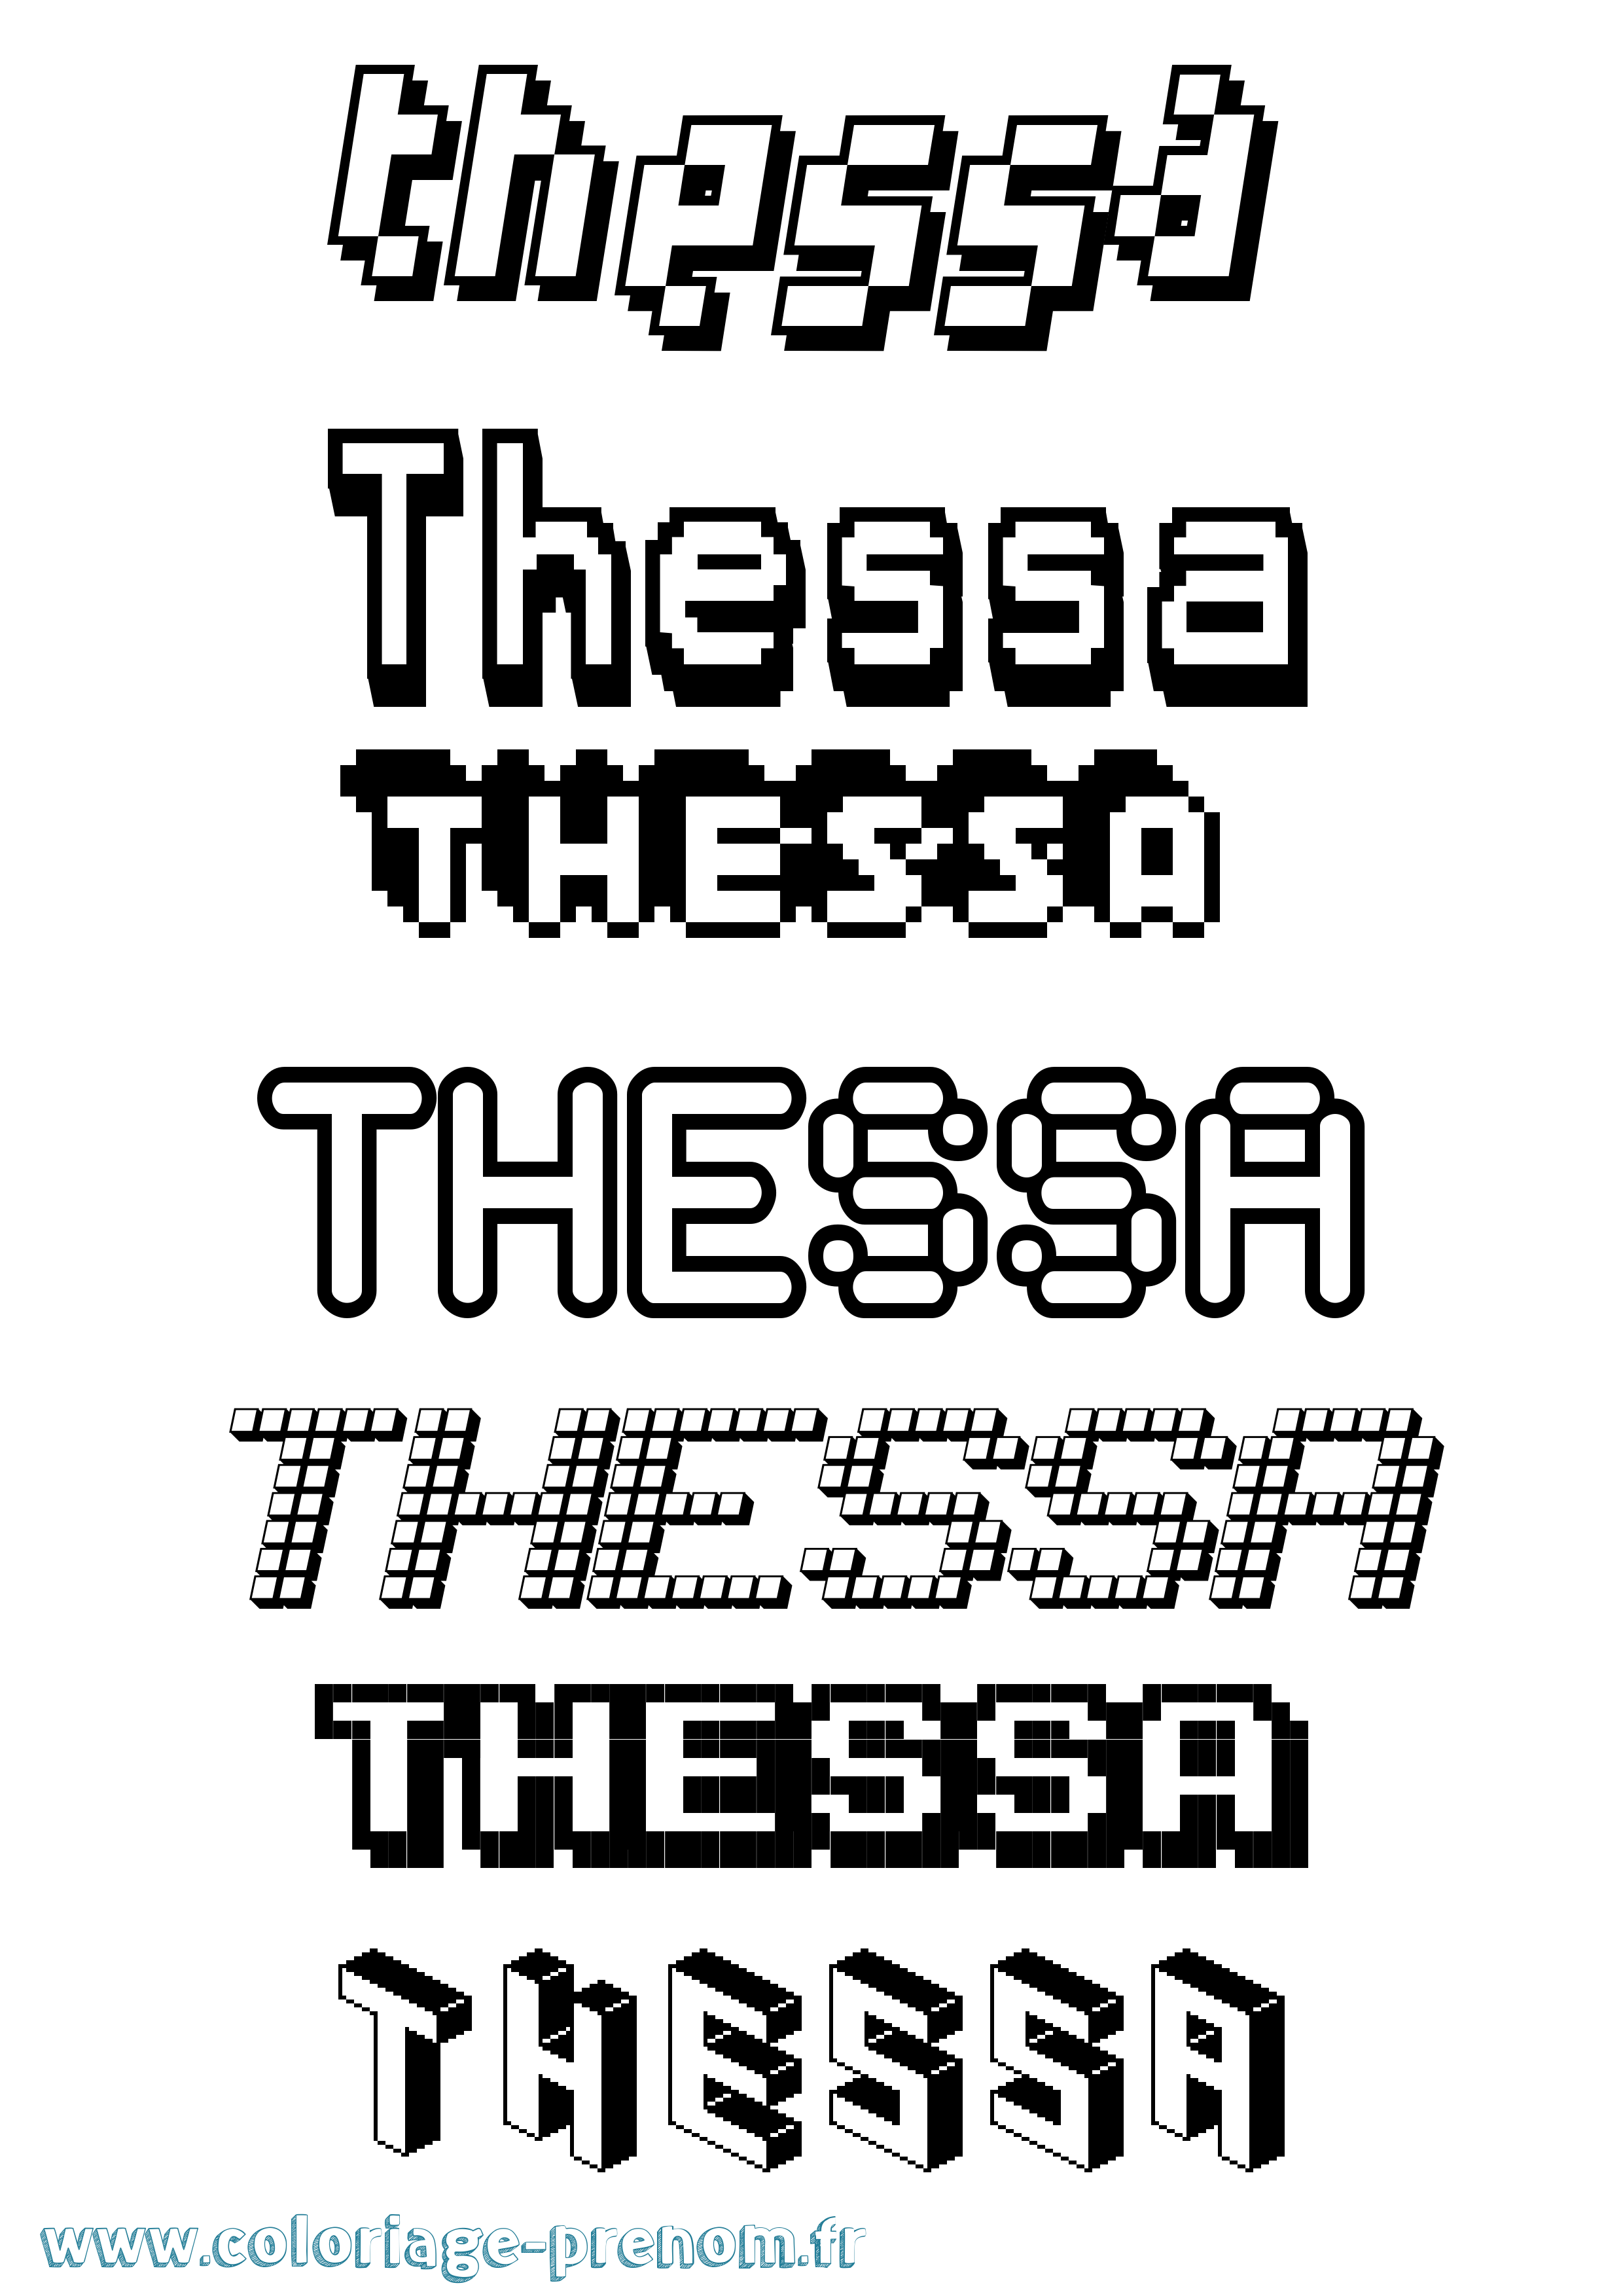 Coloriage prénom Thessa Pixel